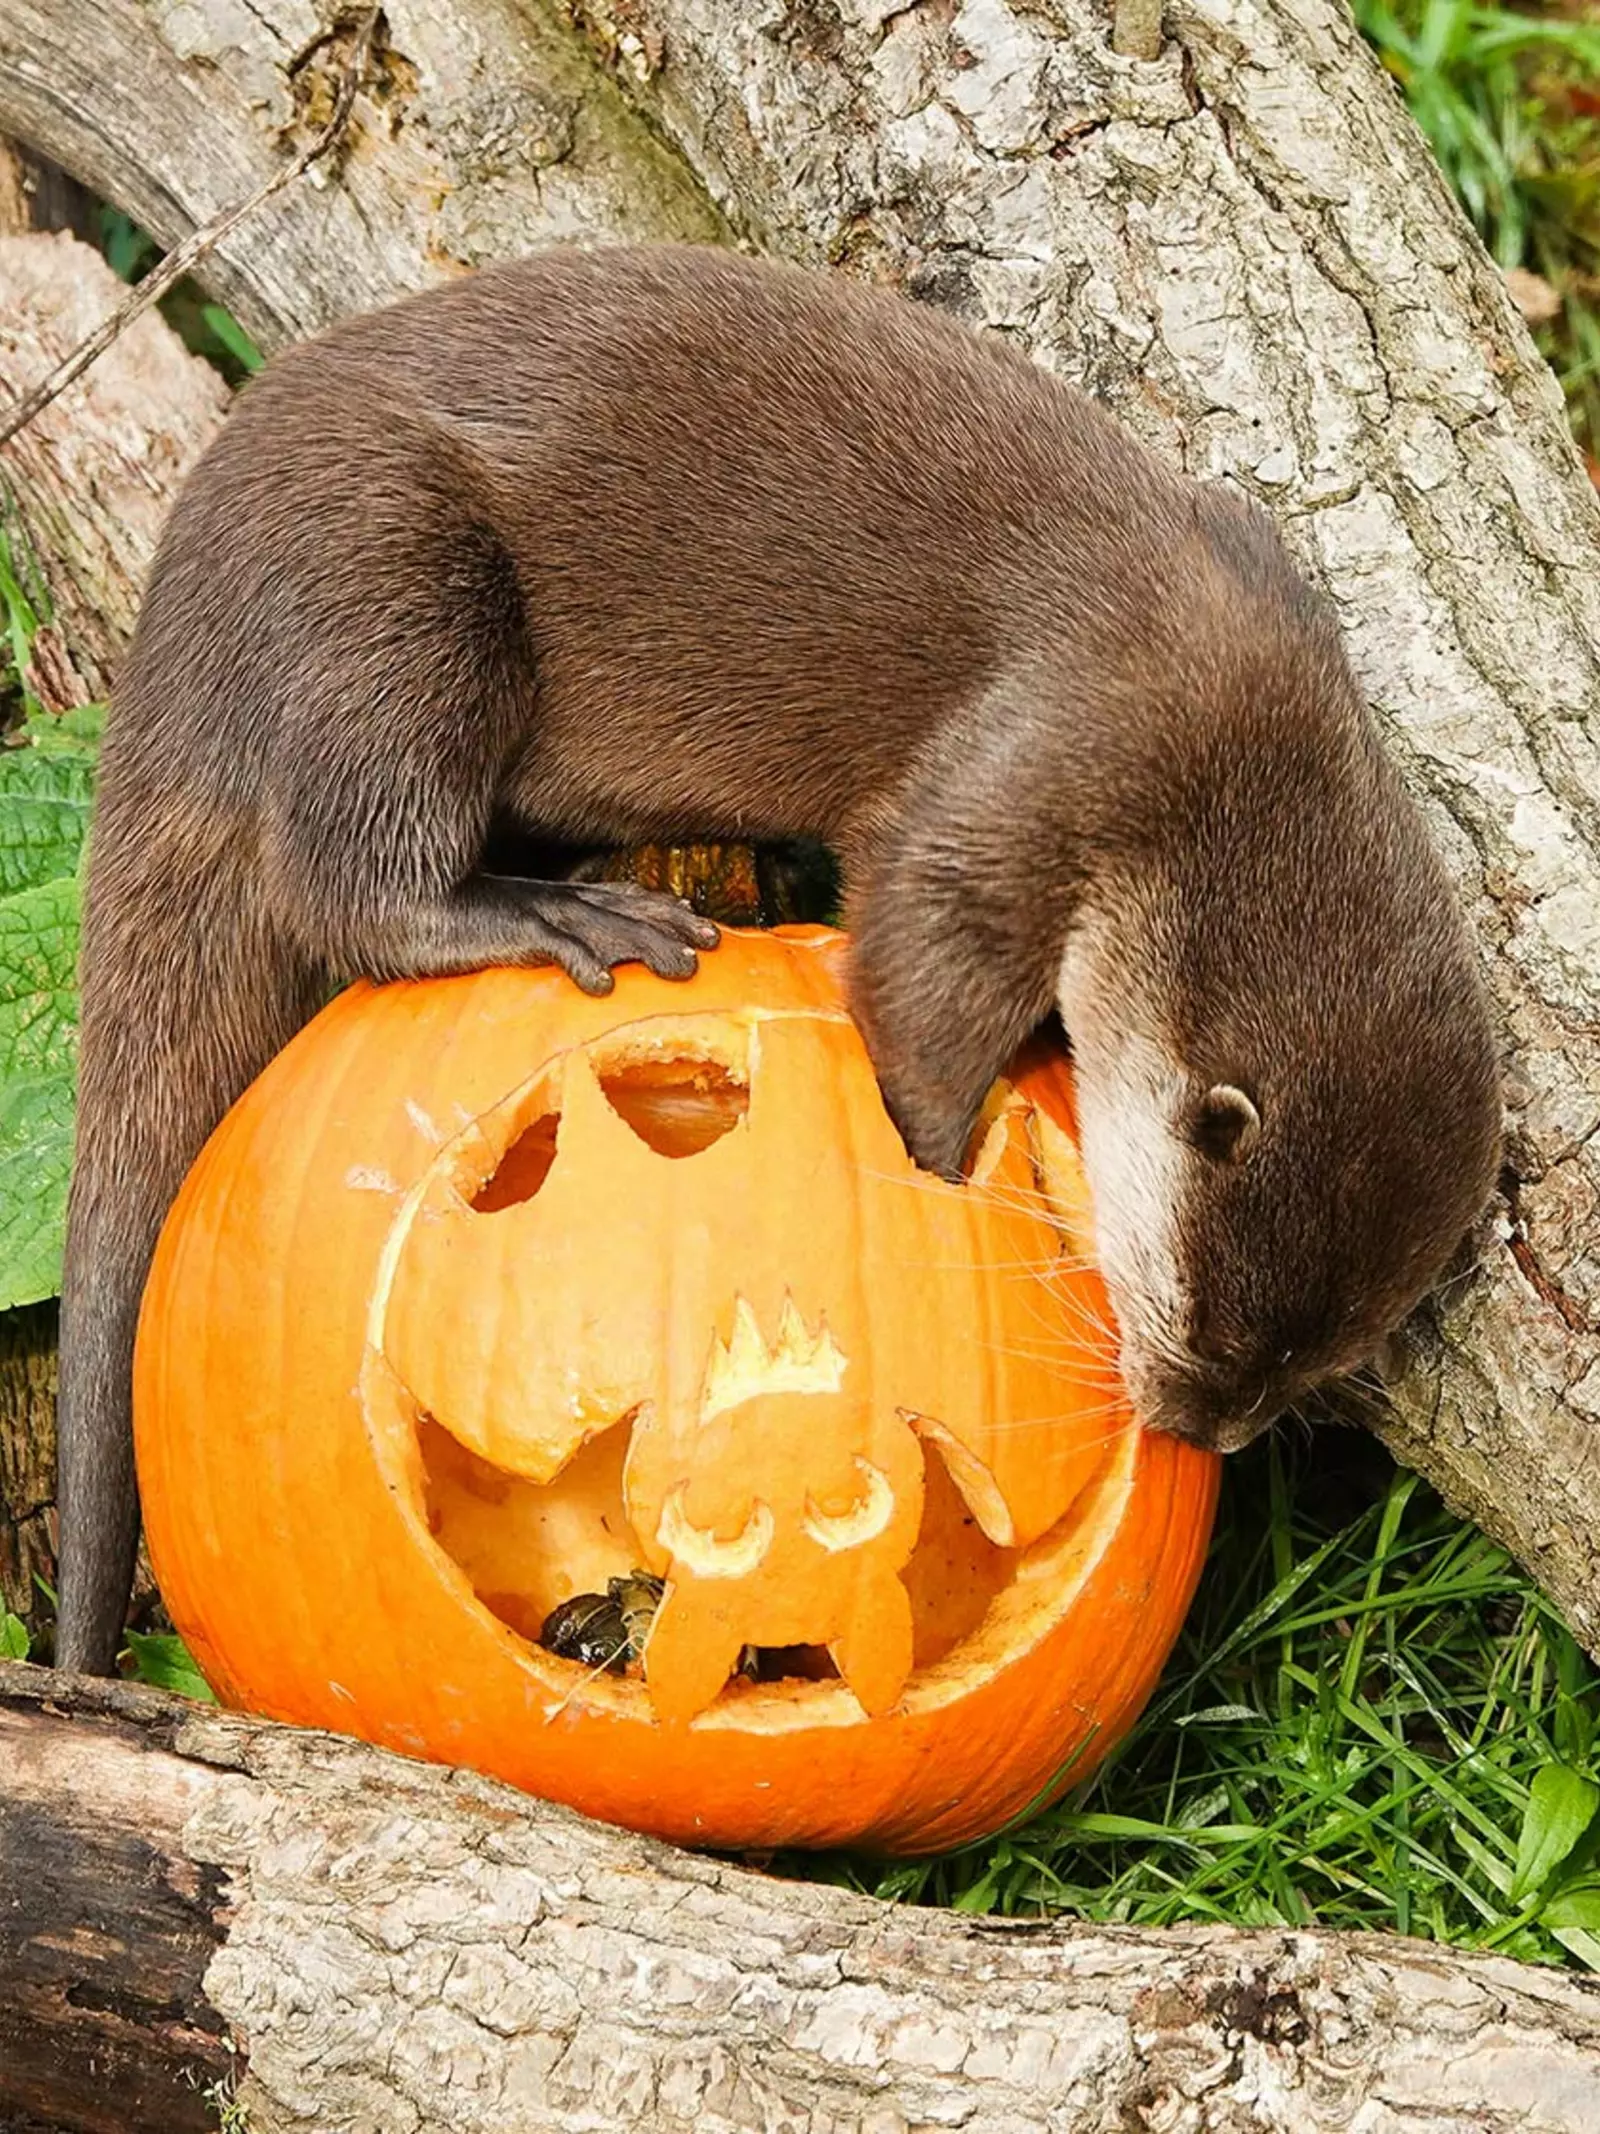 Otter explores a Halloween pumpkin at Whipsnade Zoo